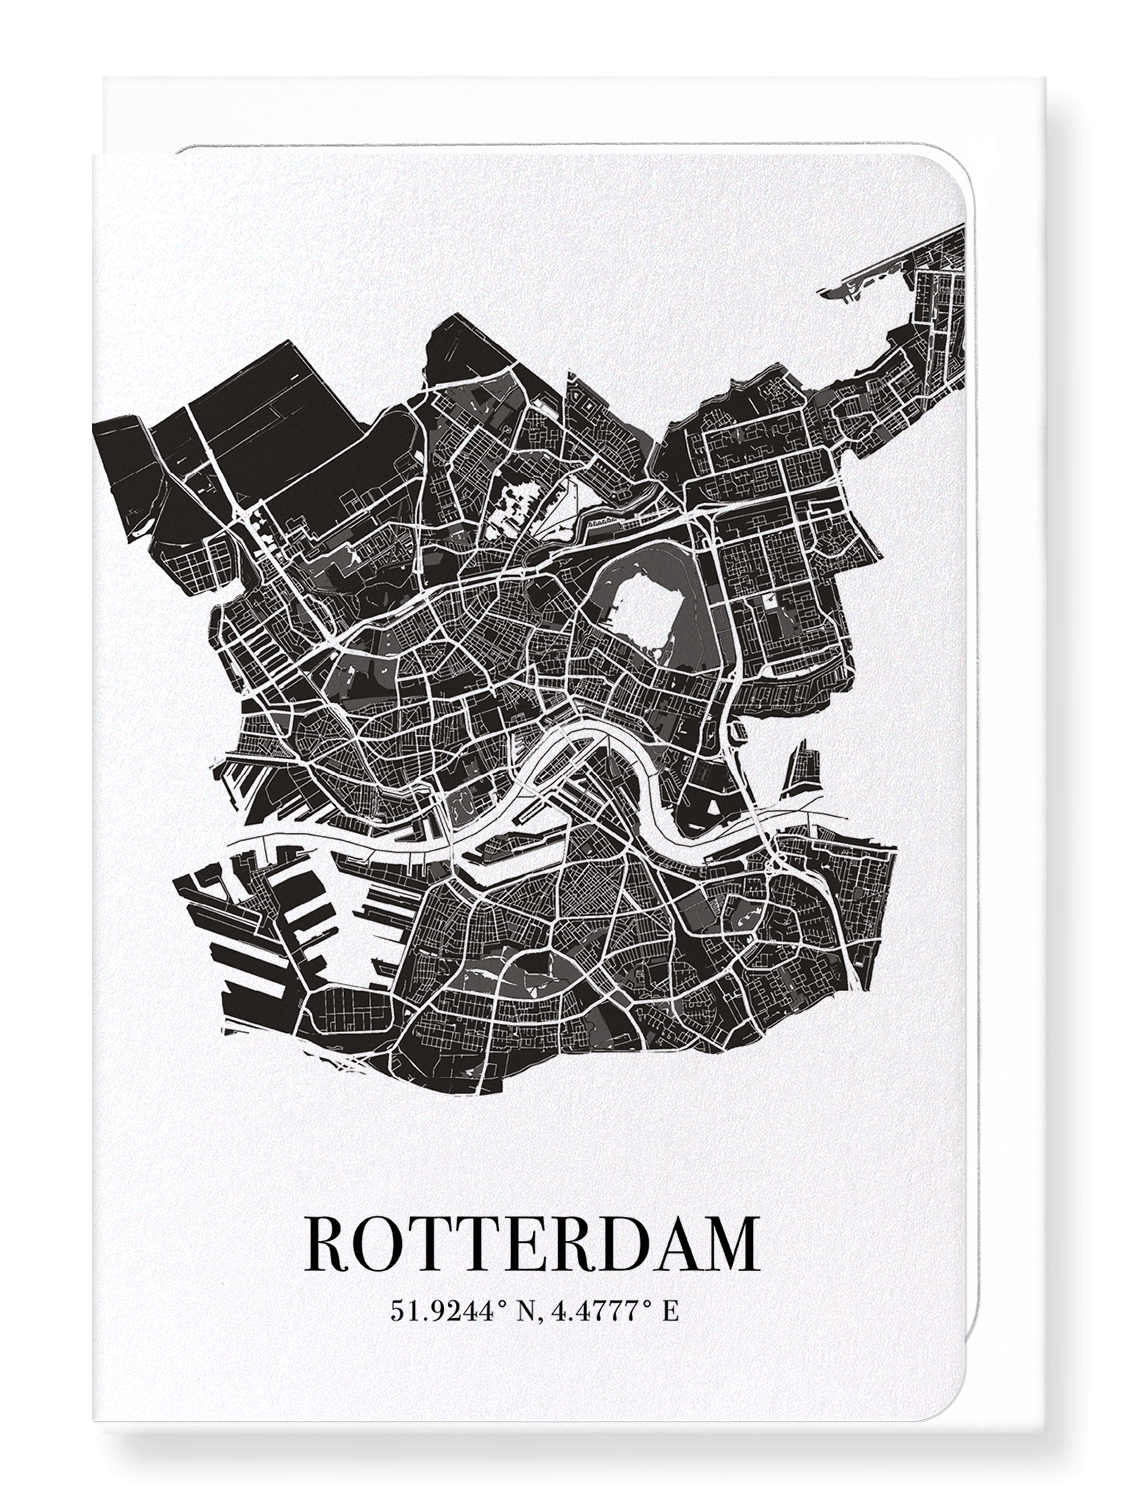 ROTTERDAM CUTOUT: Map Cutout Greeting Card